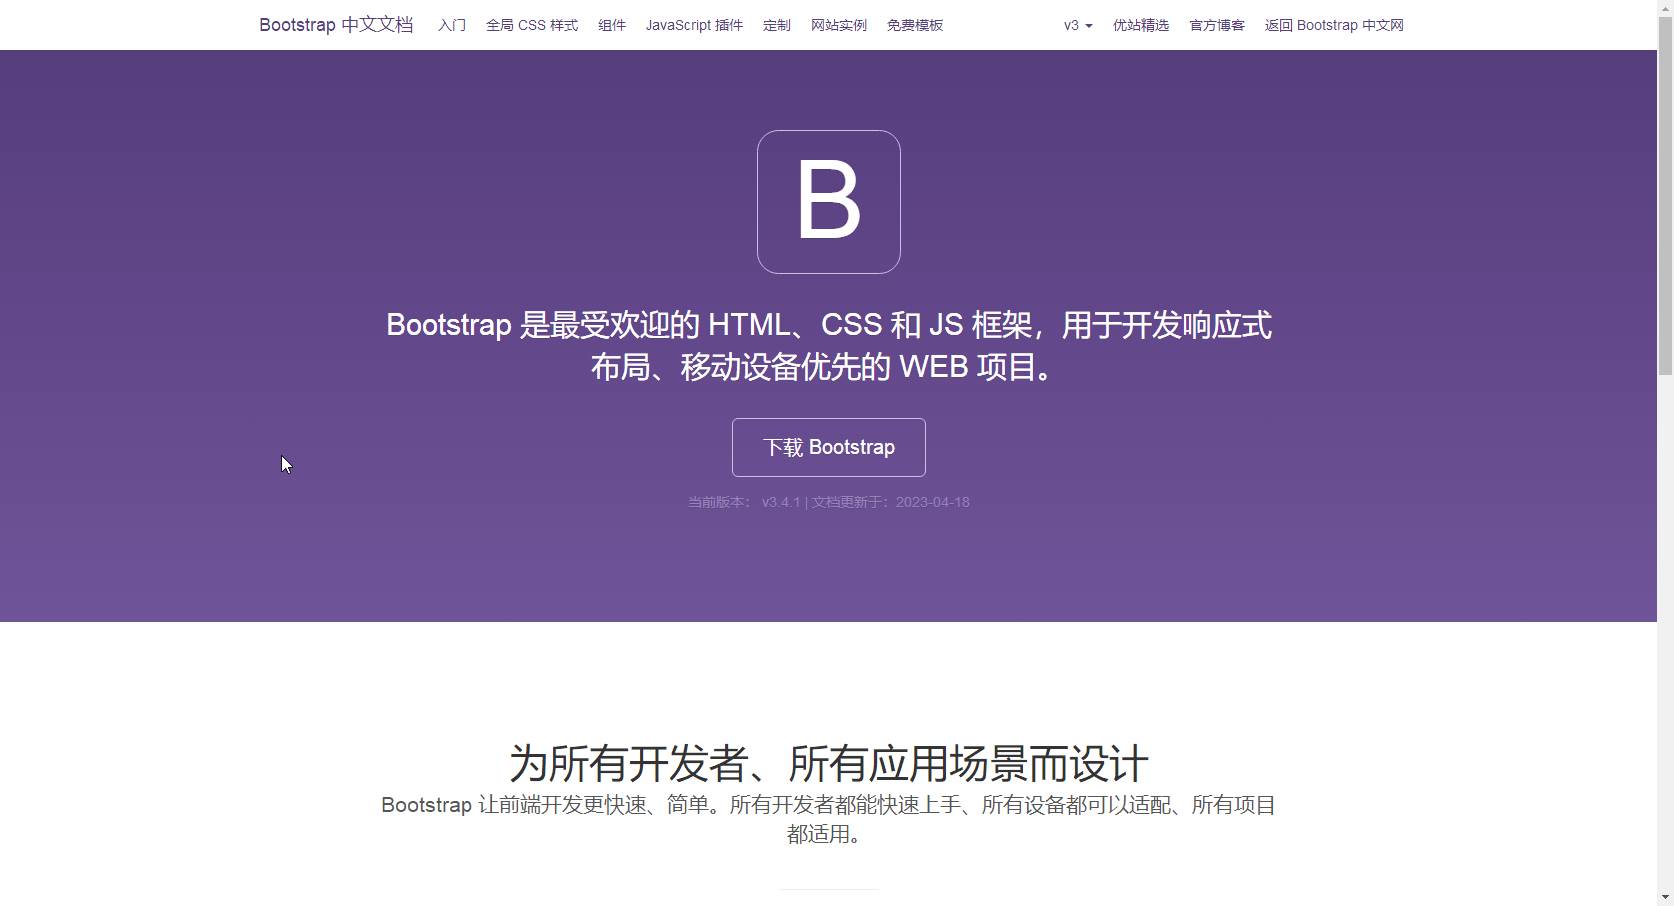 Bootstrap 中文网